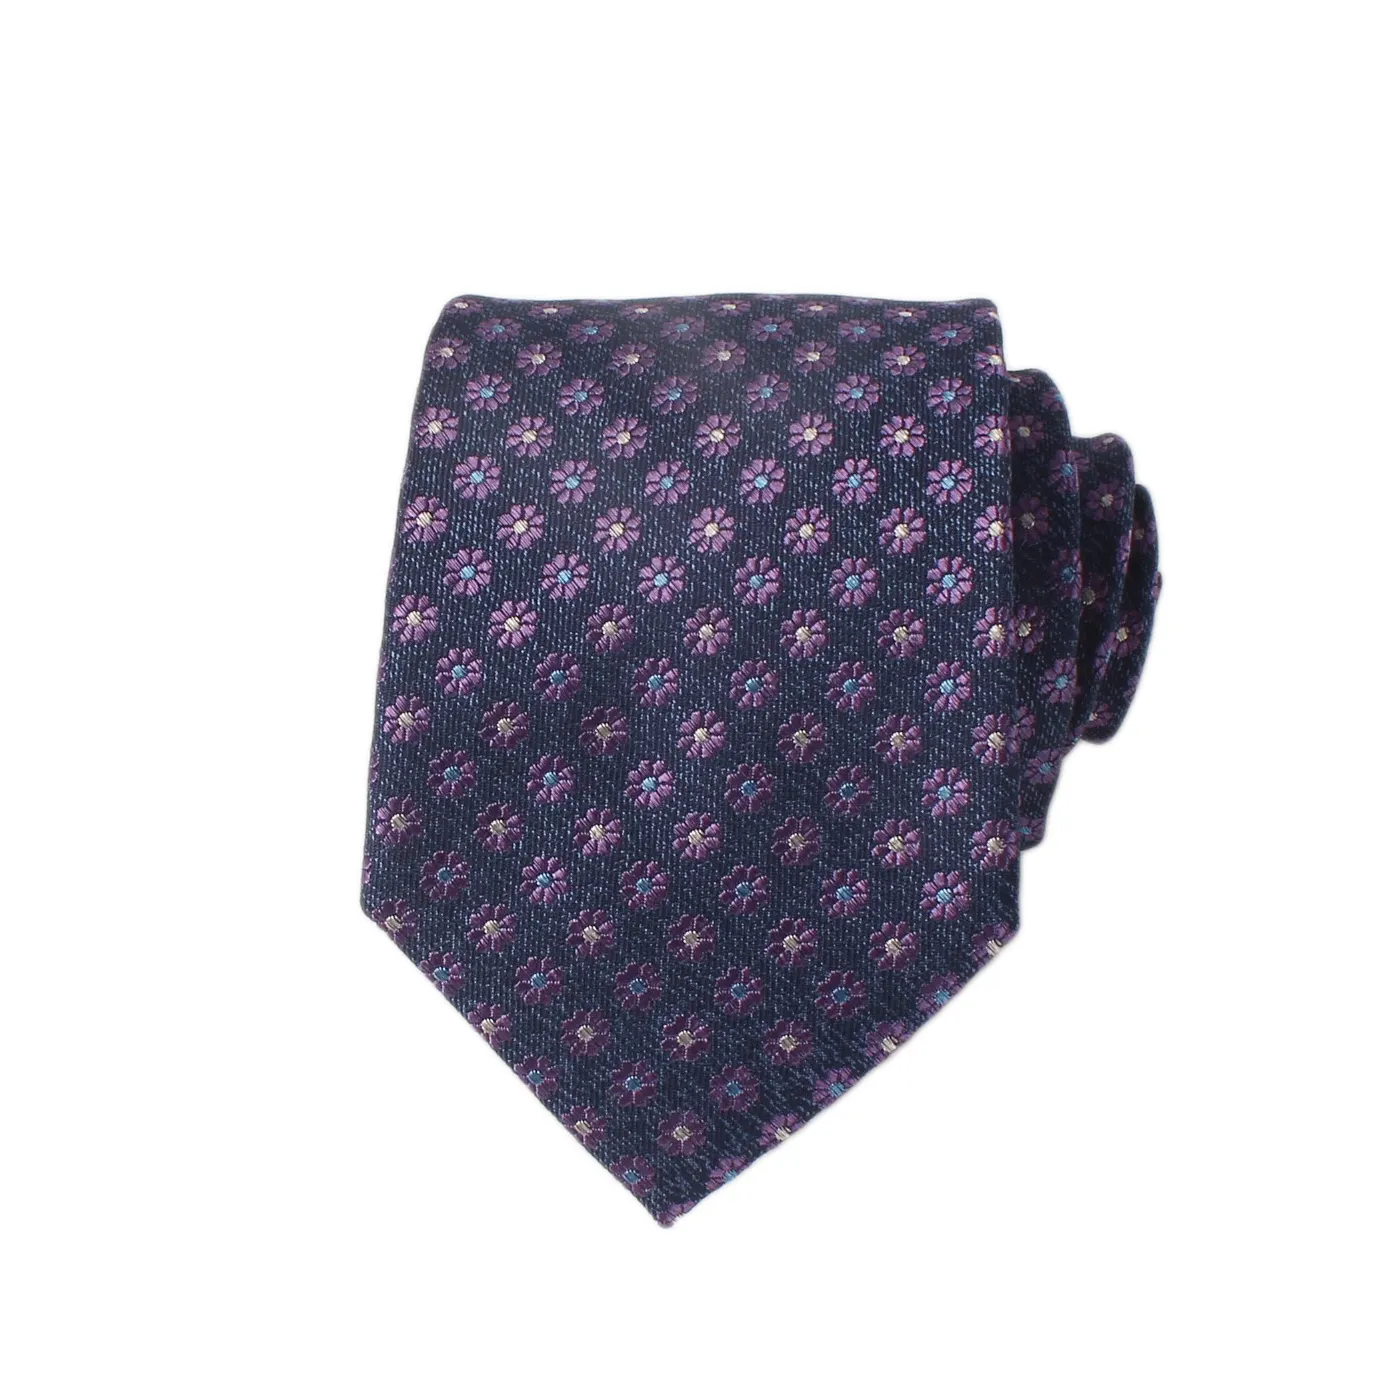 Dacheng China Necktie Manufacture Purple Pink Silk Jacquard Woven Cravate Gravata Ties For Men